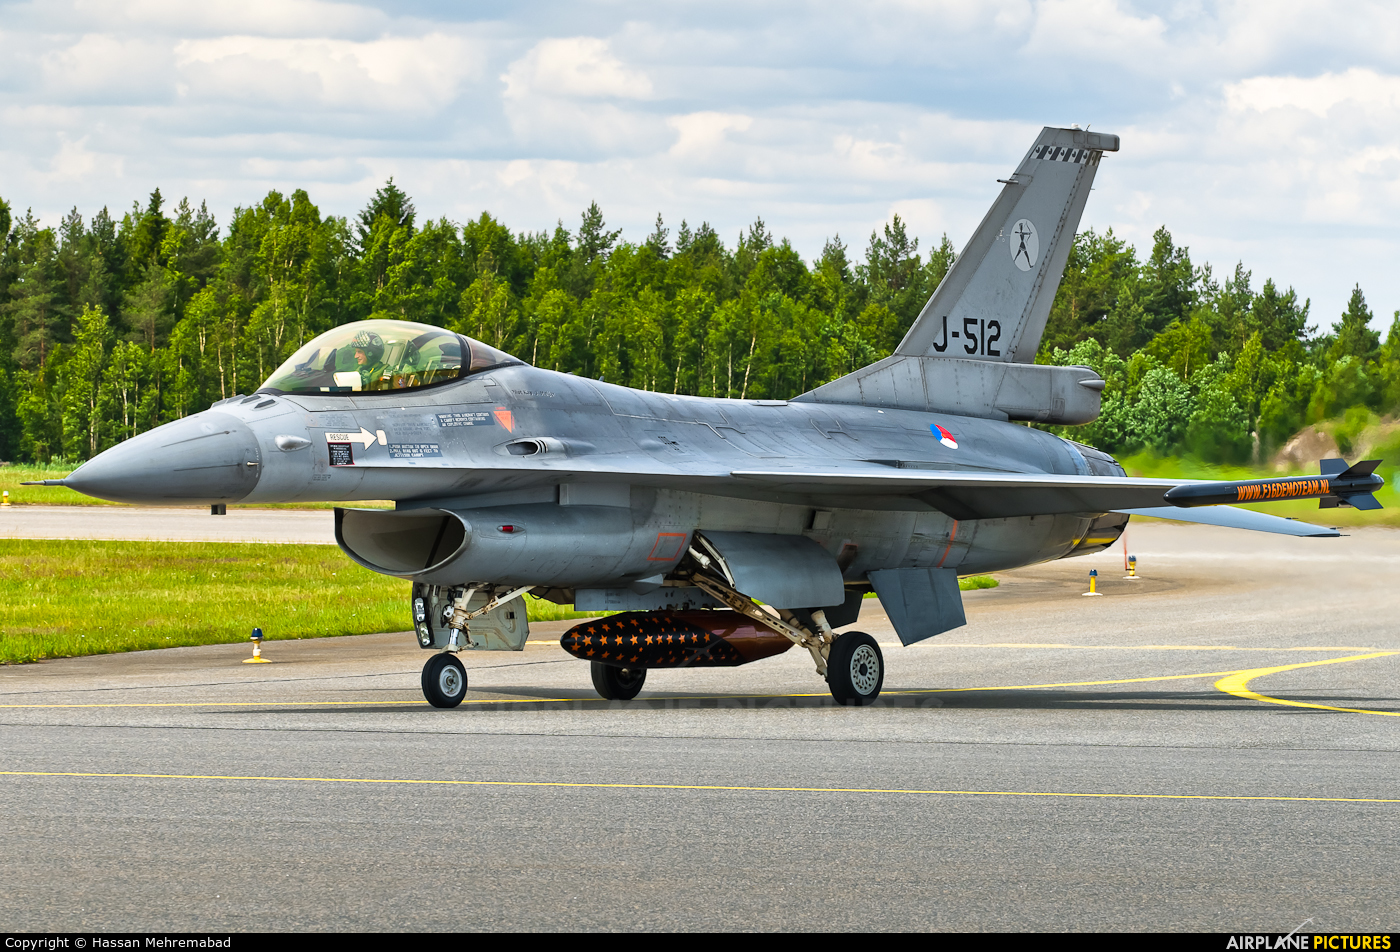 Netherlands - Air Force J-512 aircraft at Turku